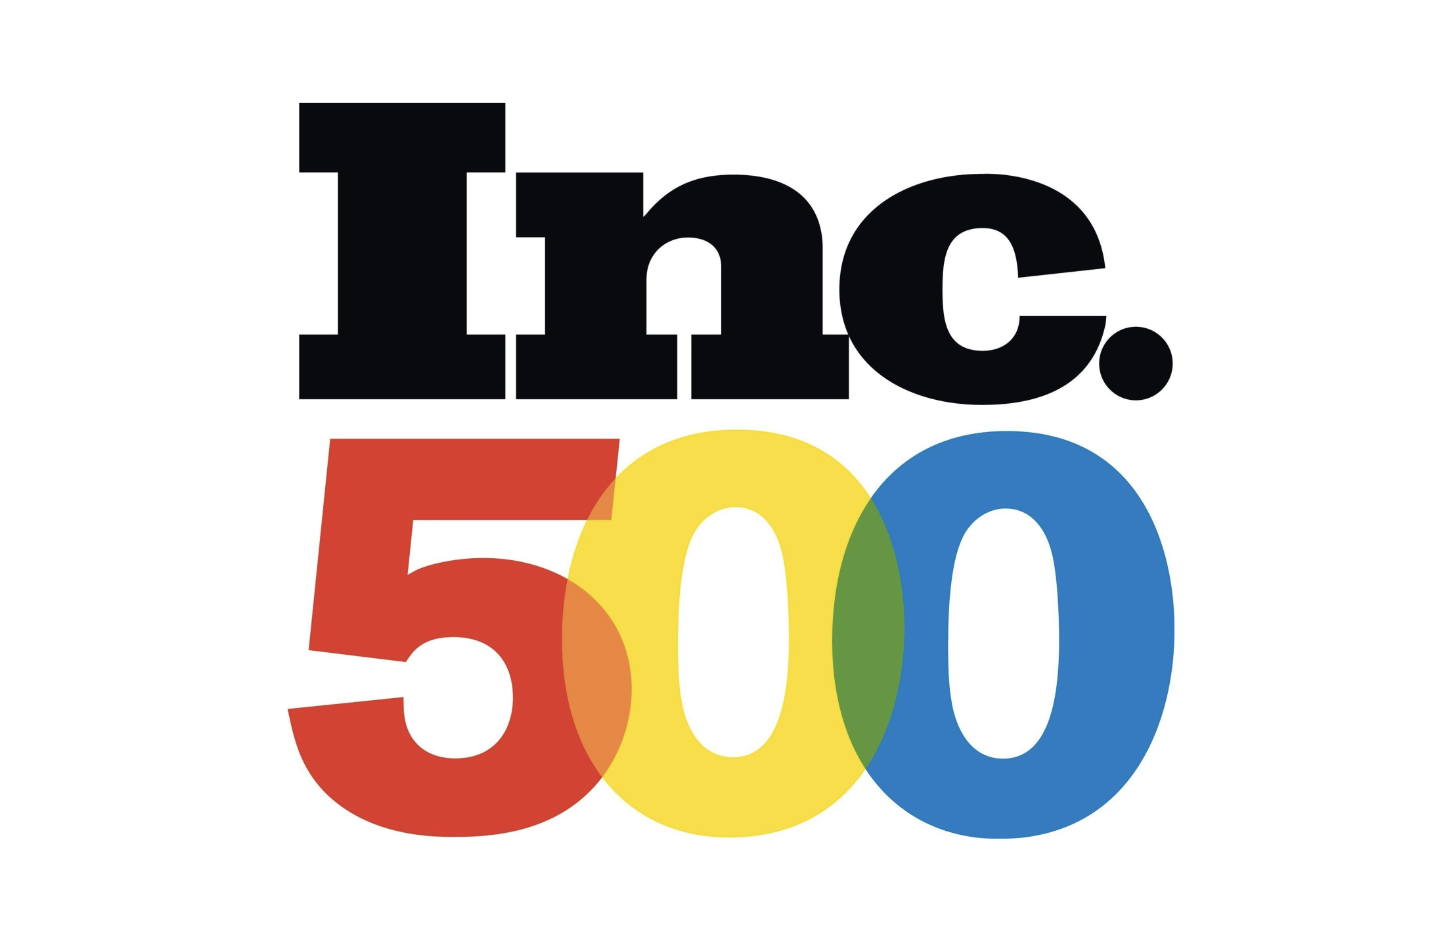 The Inc.500 colorful logo